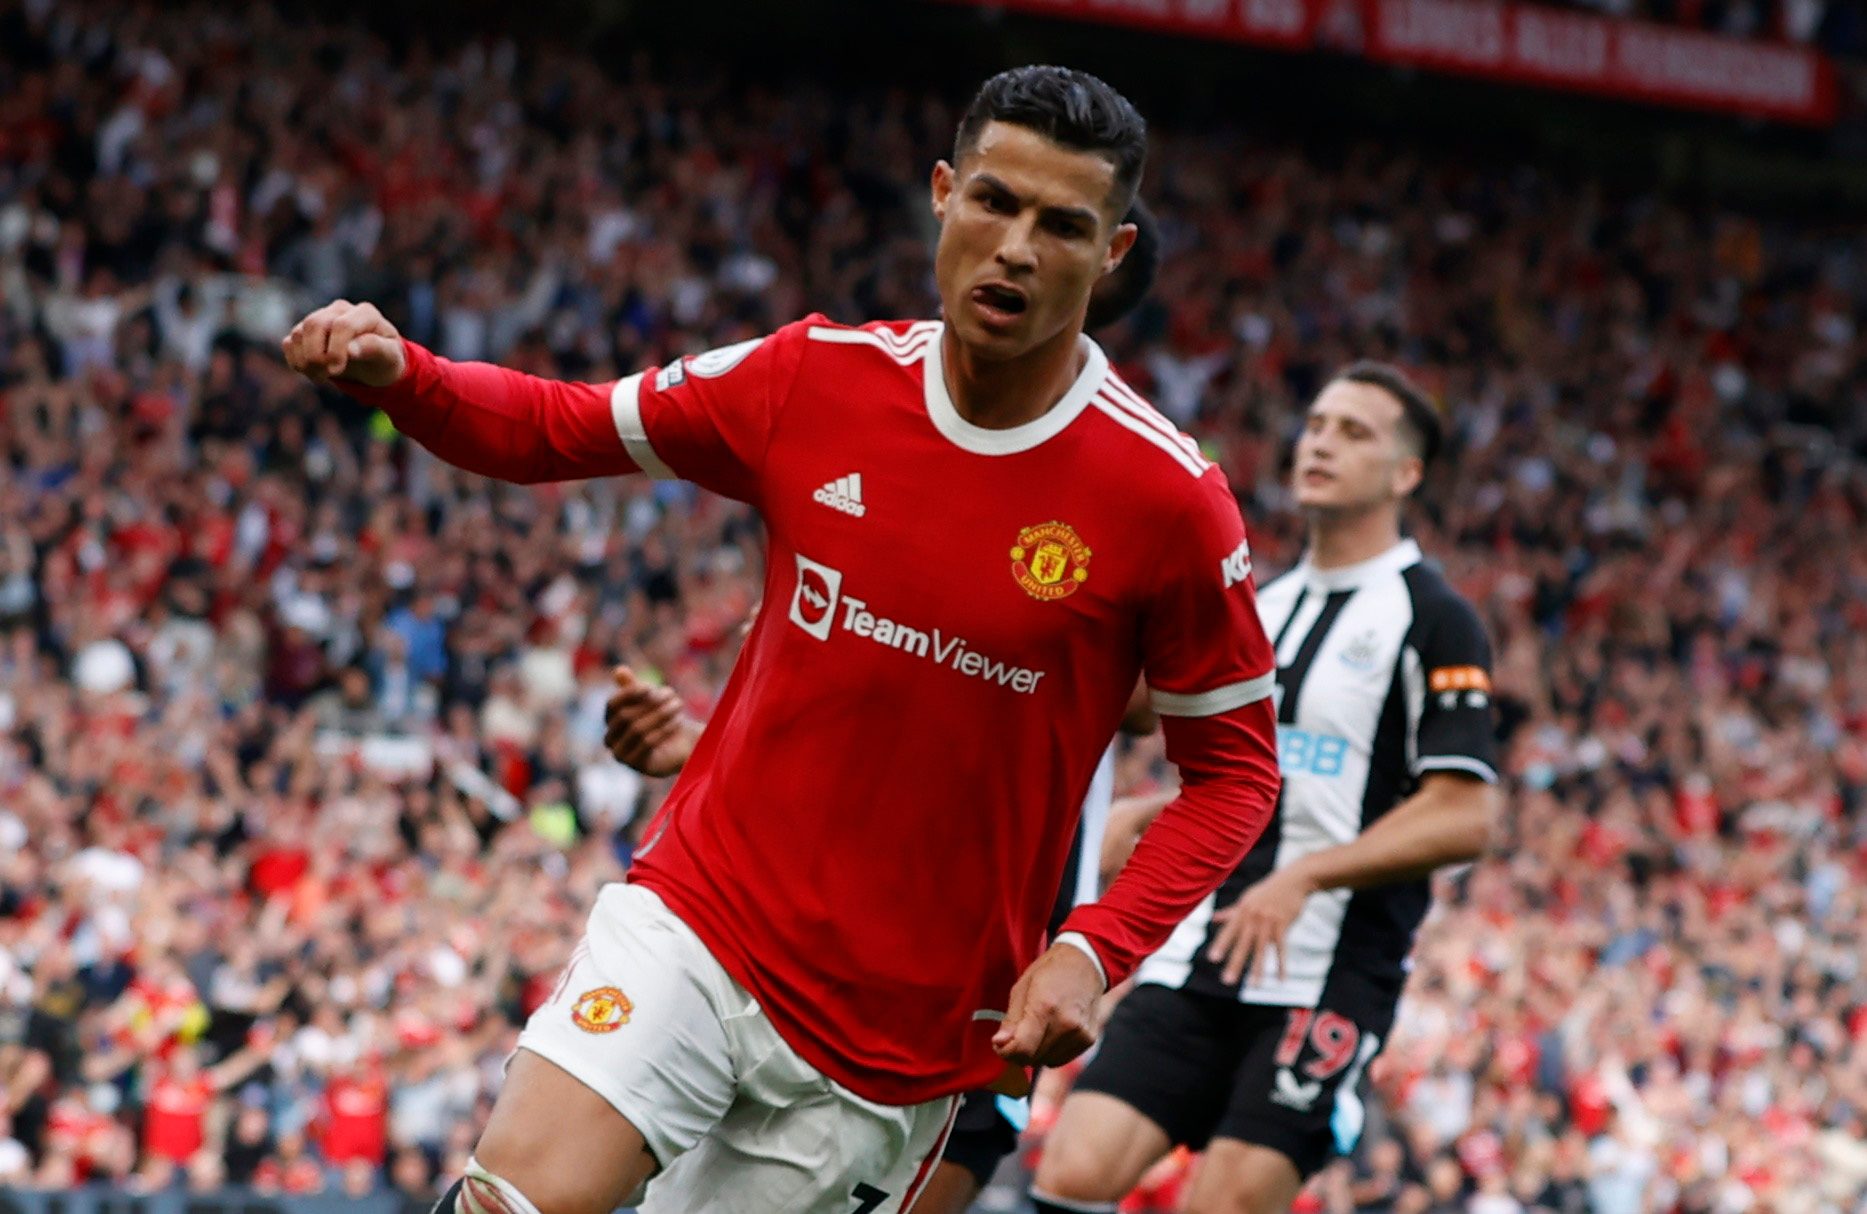 ‘I was super nervous,’ says Ronaldo after memorable second debut at Man United